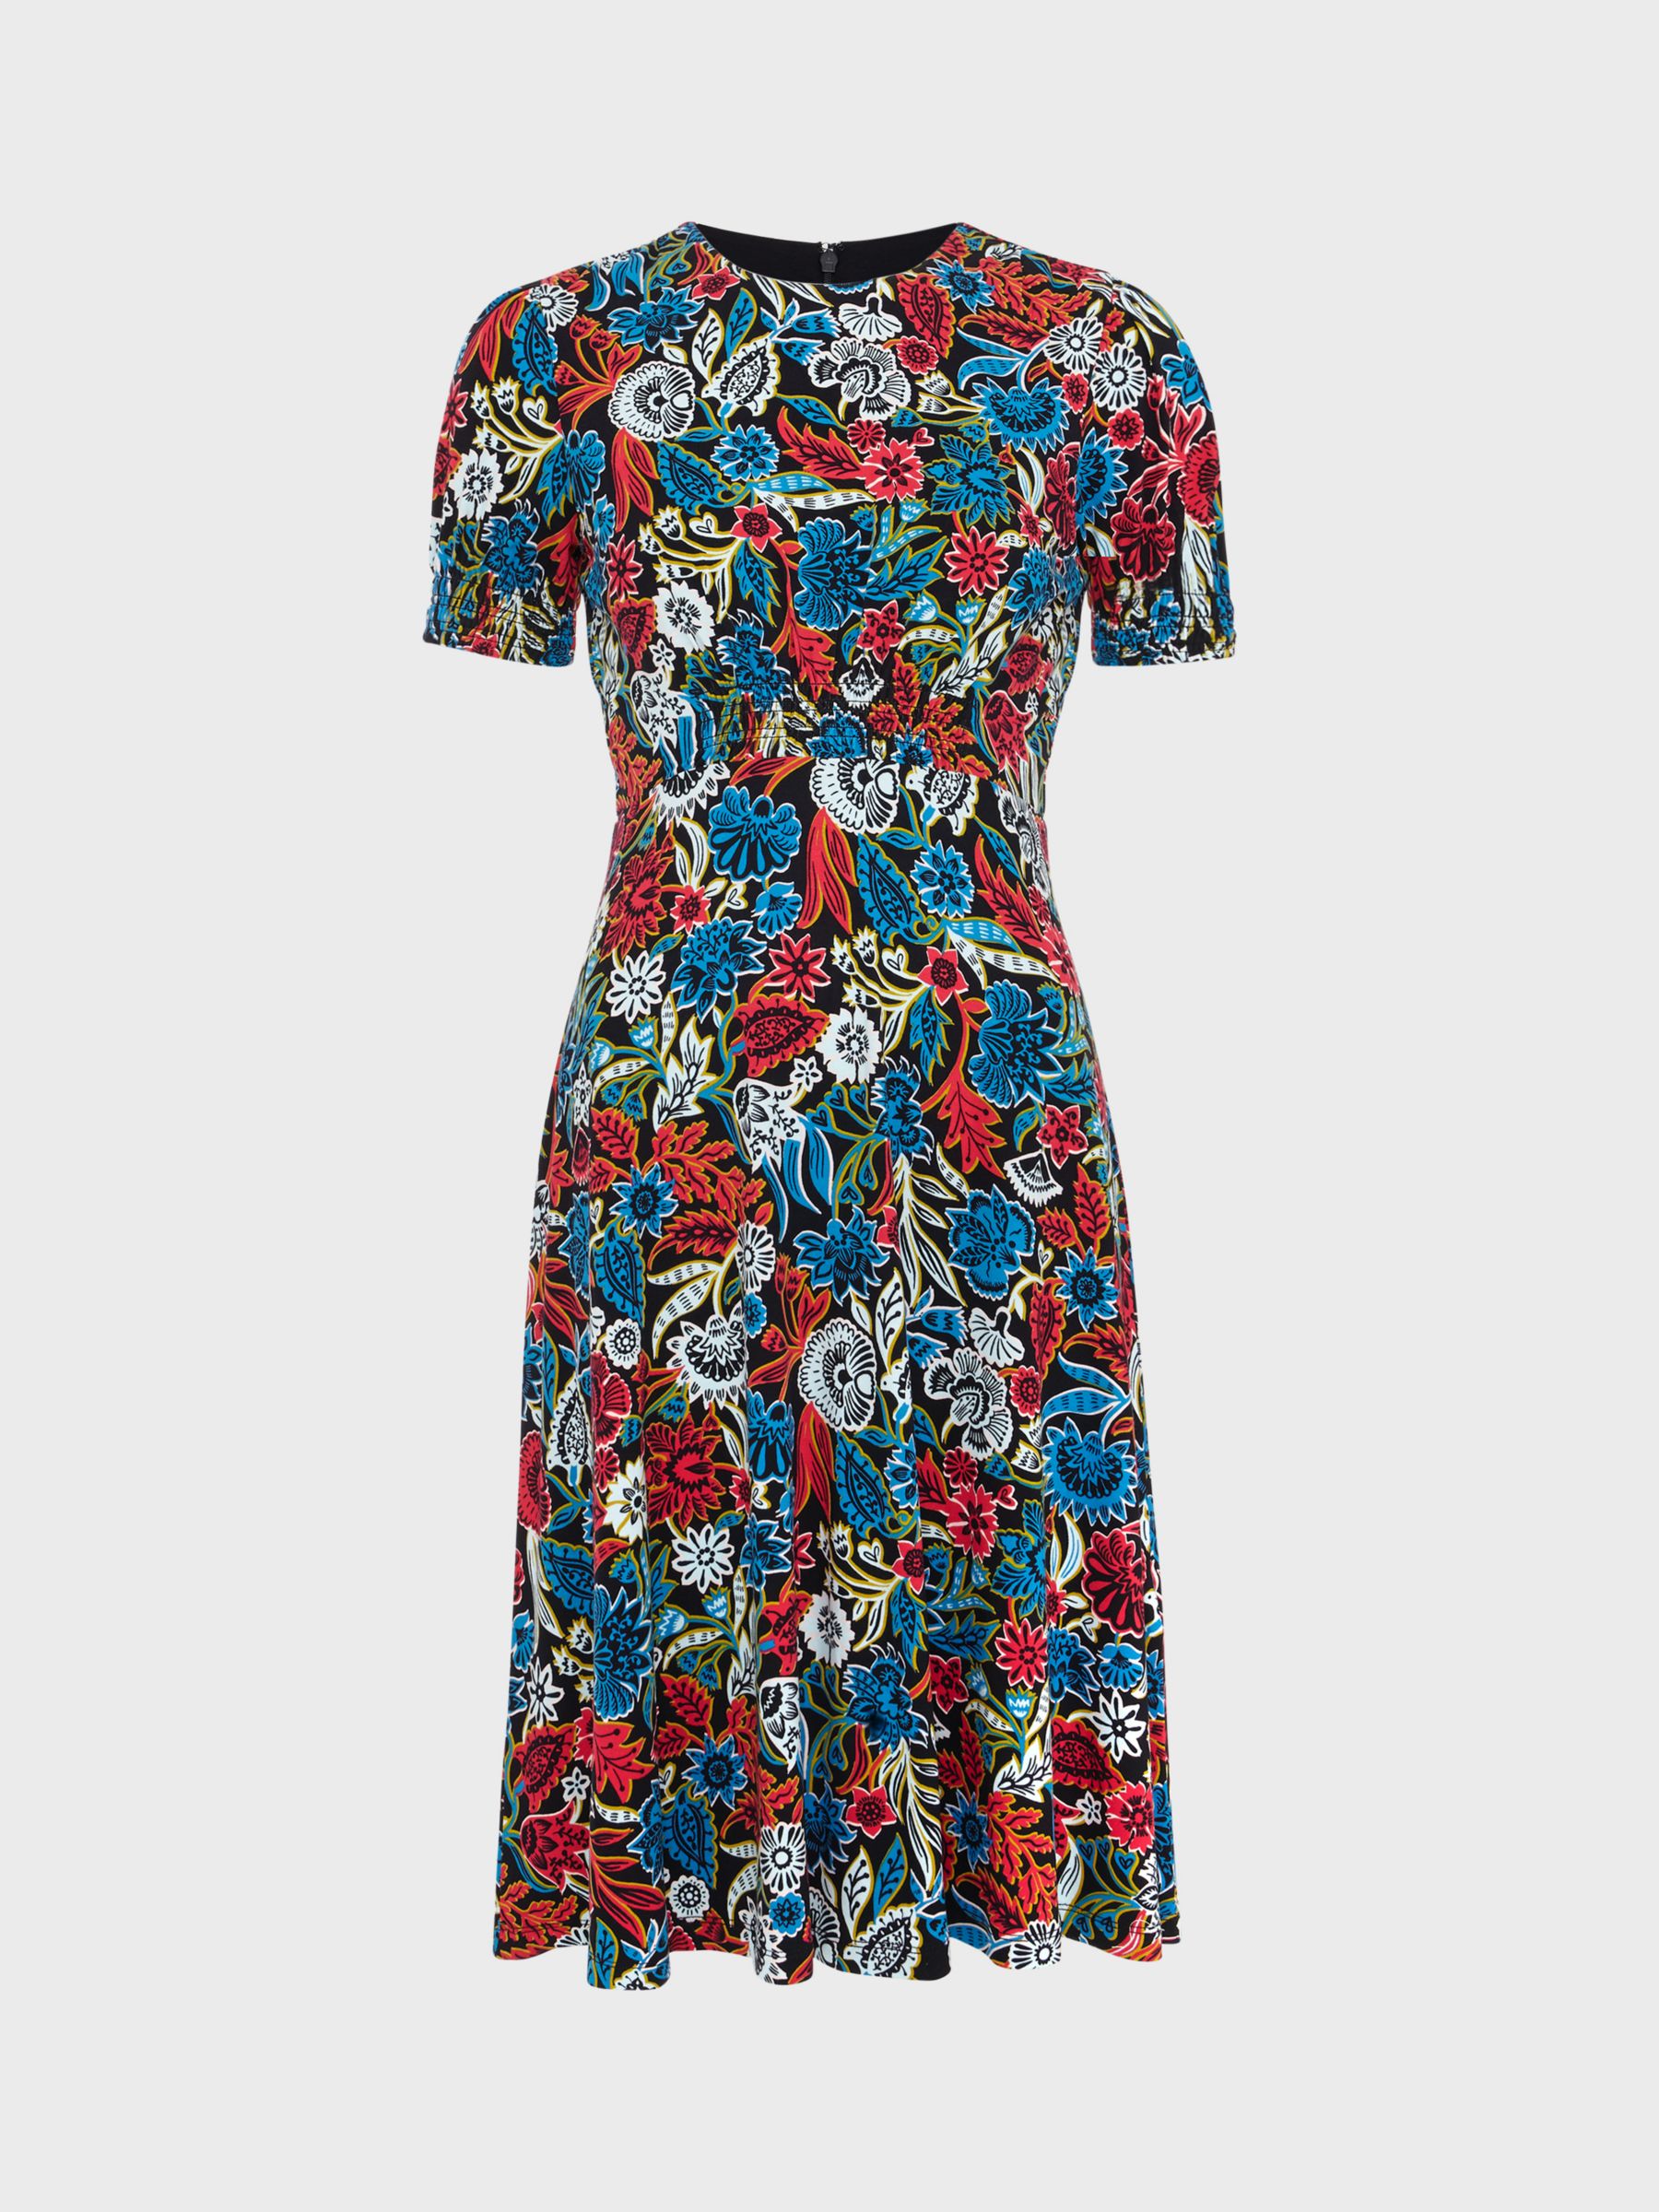 Hobbs Petite Rima Botanical Print Jersey Dress, Multi, 10